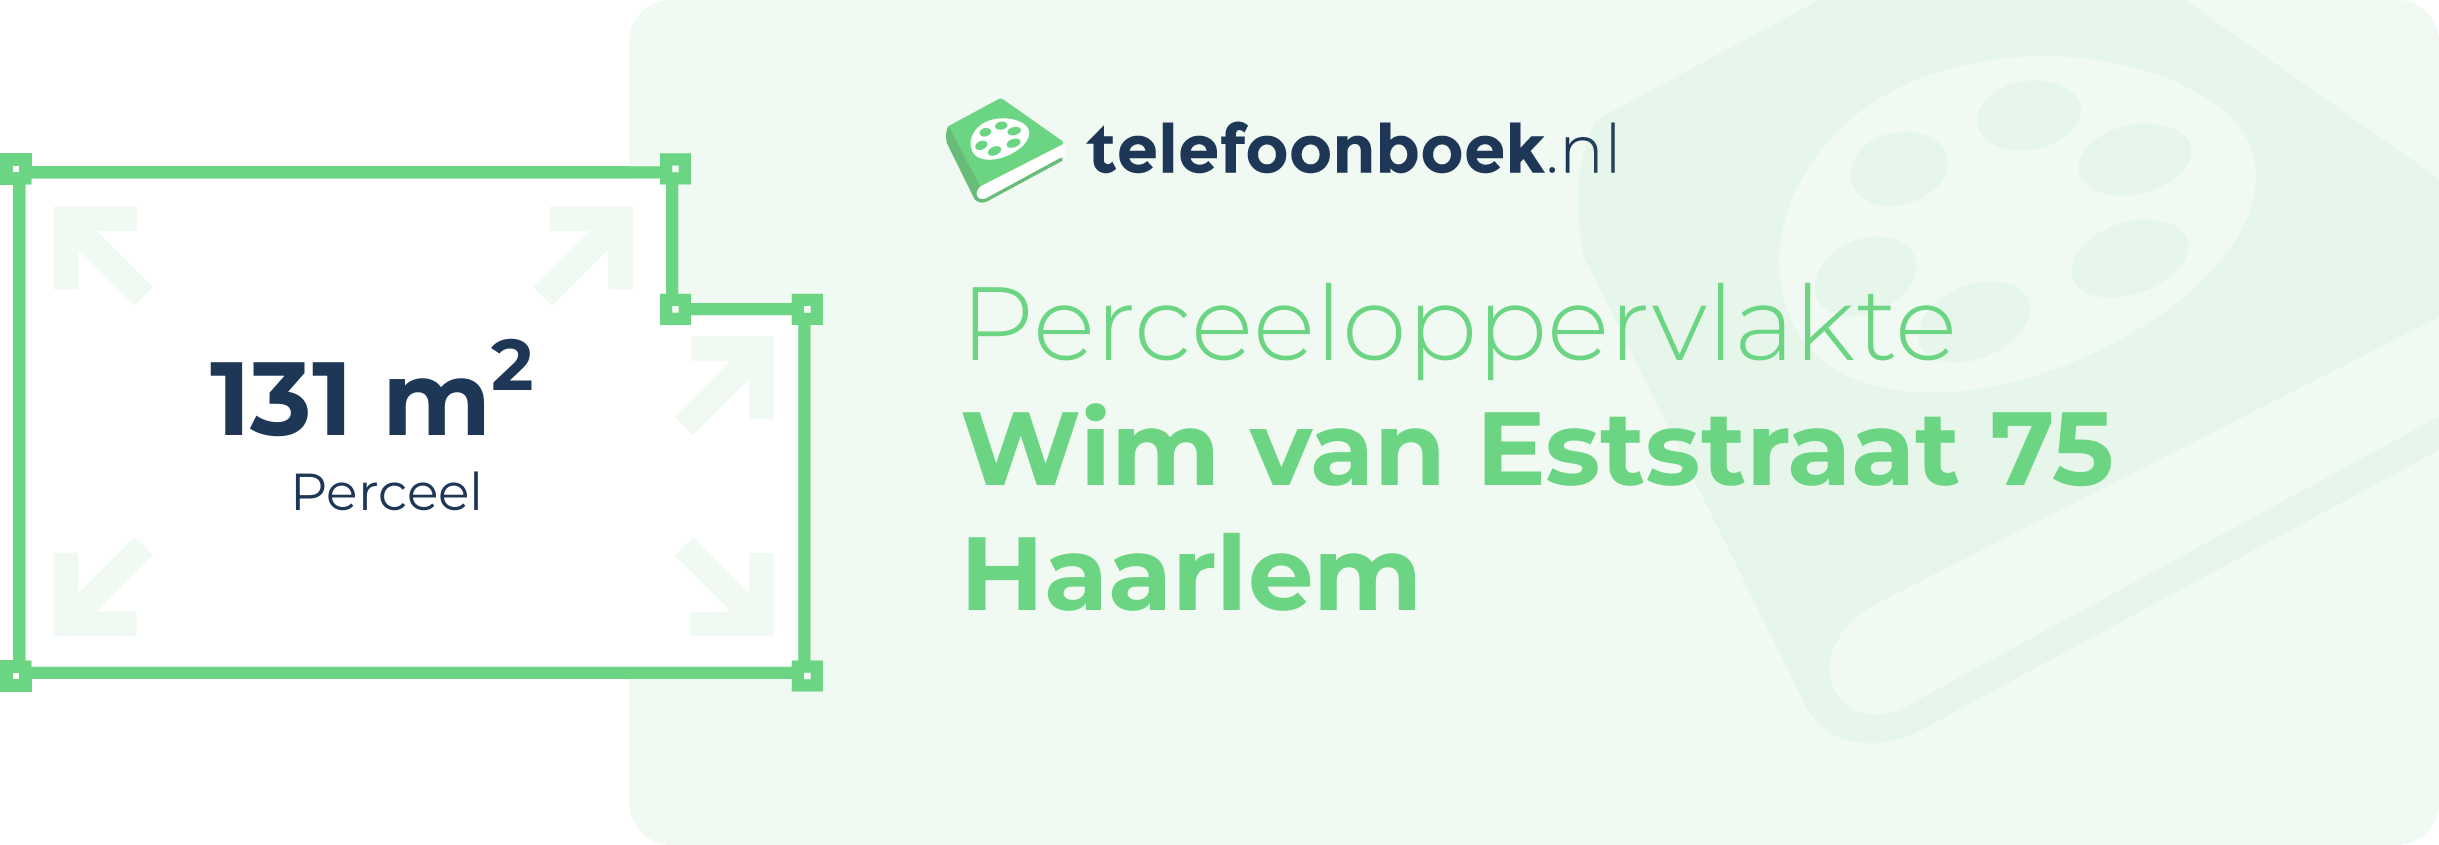 Perceeloppervlakte Wim Van Eststraat 75 Haarlem